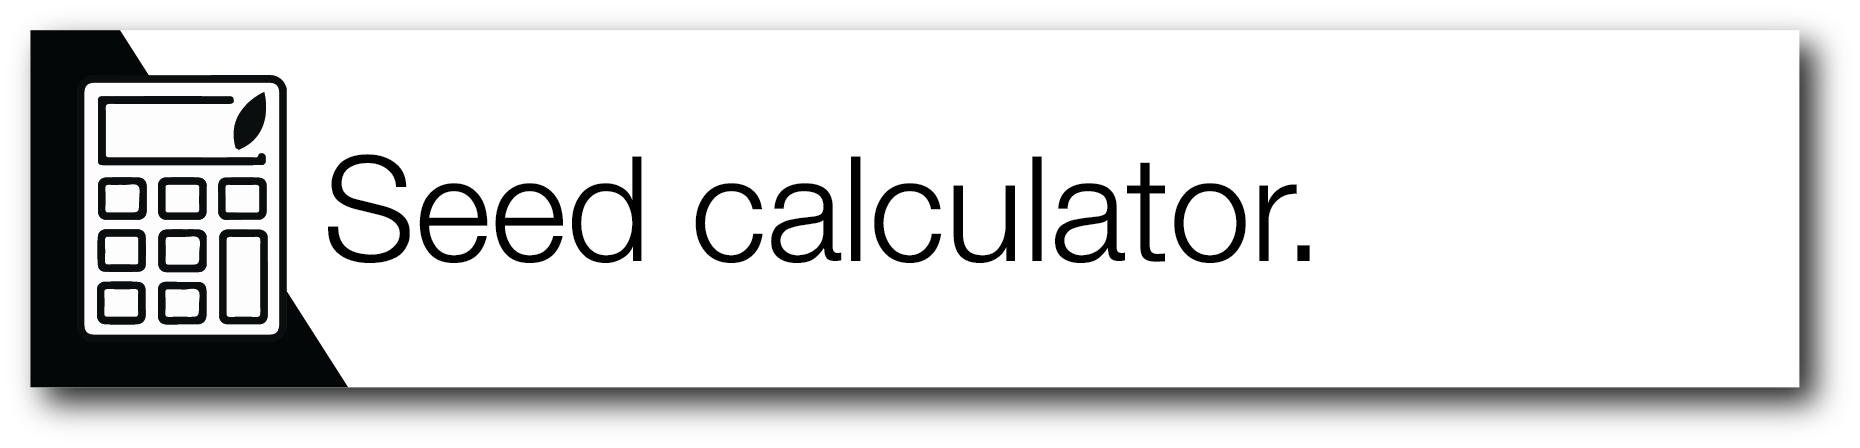 Seed Calculator Tool